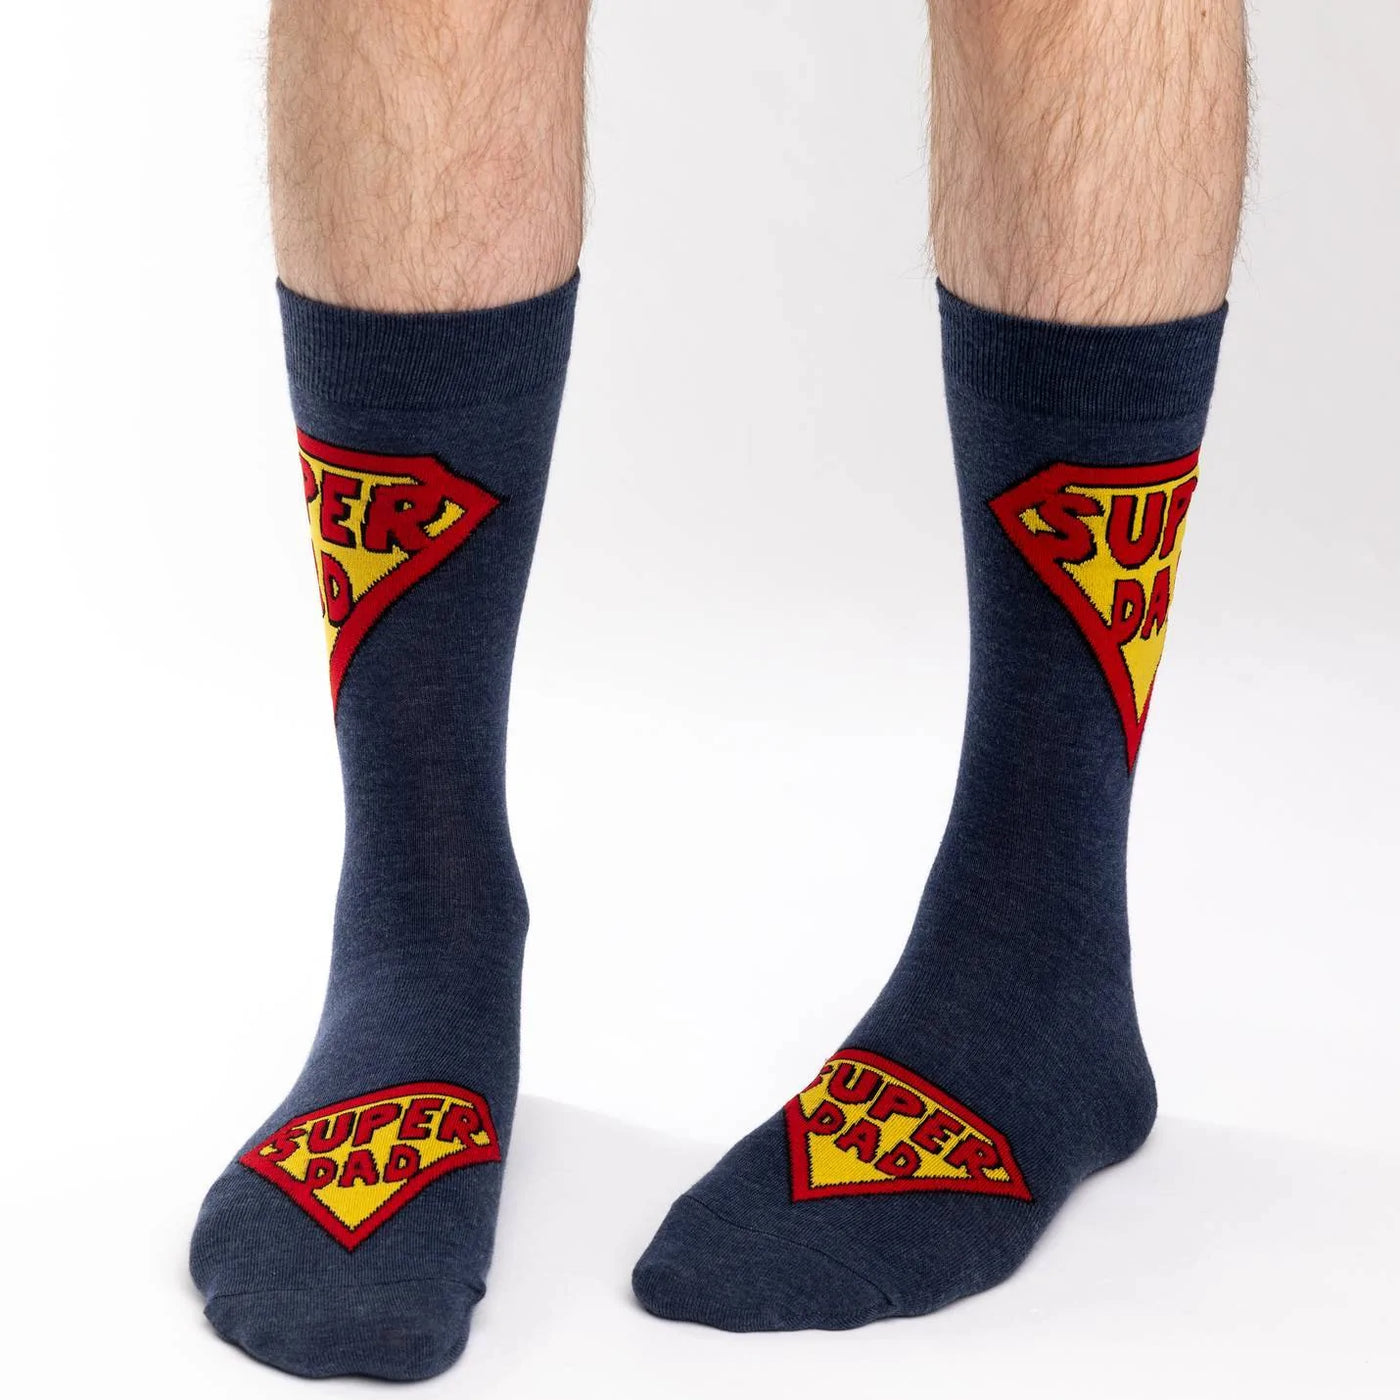 Super Dad Men Socks